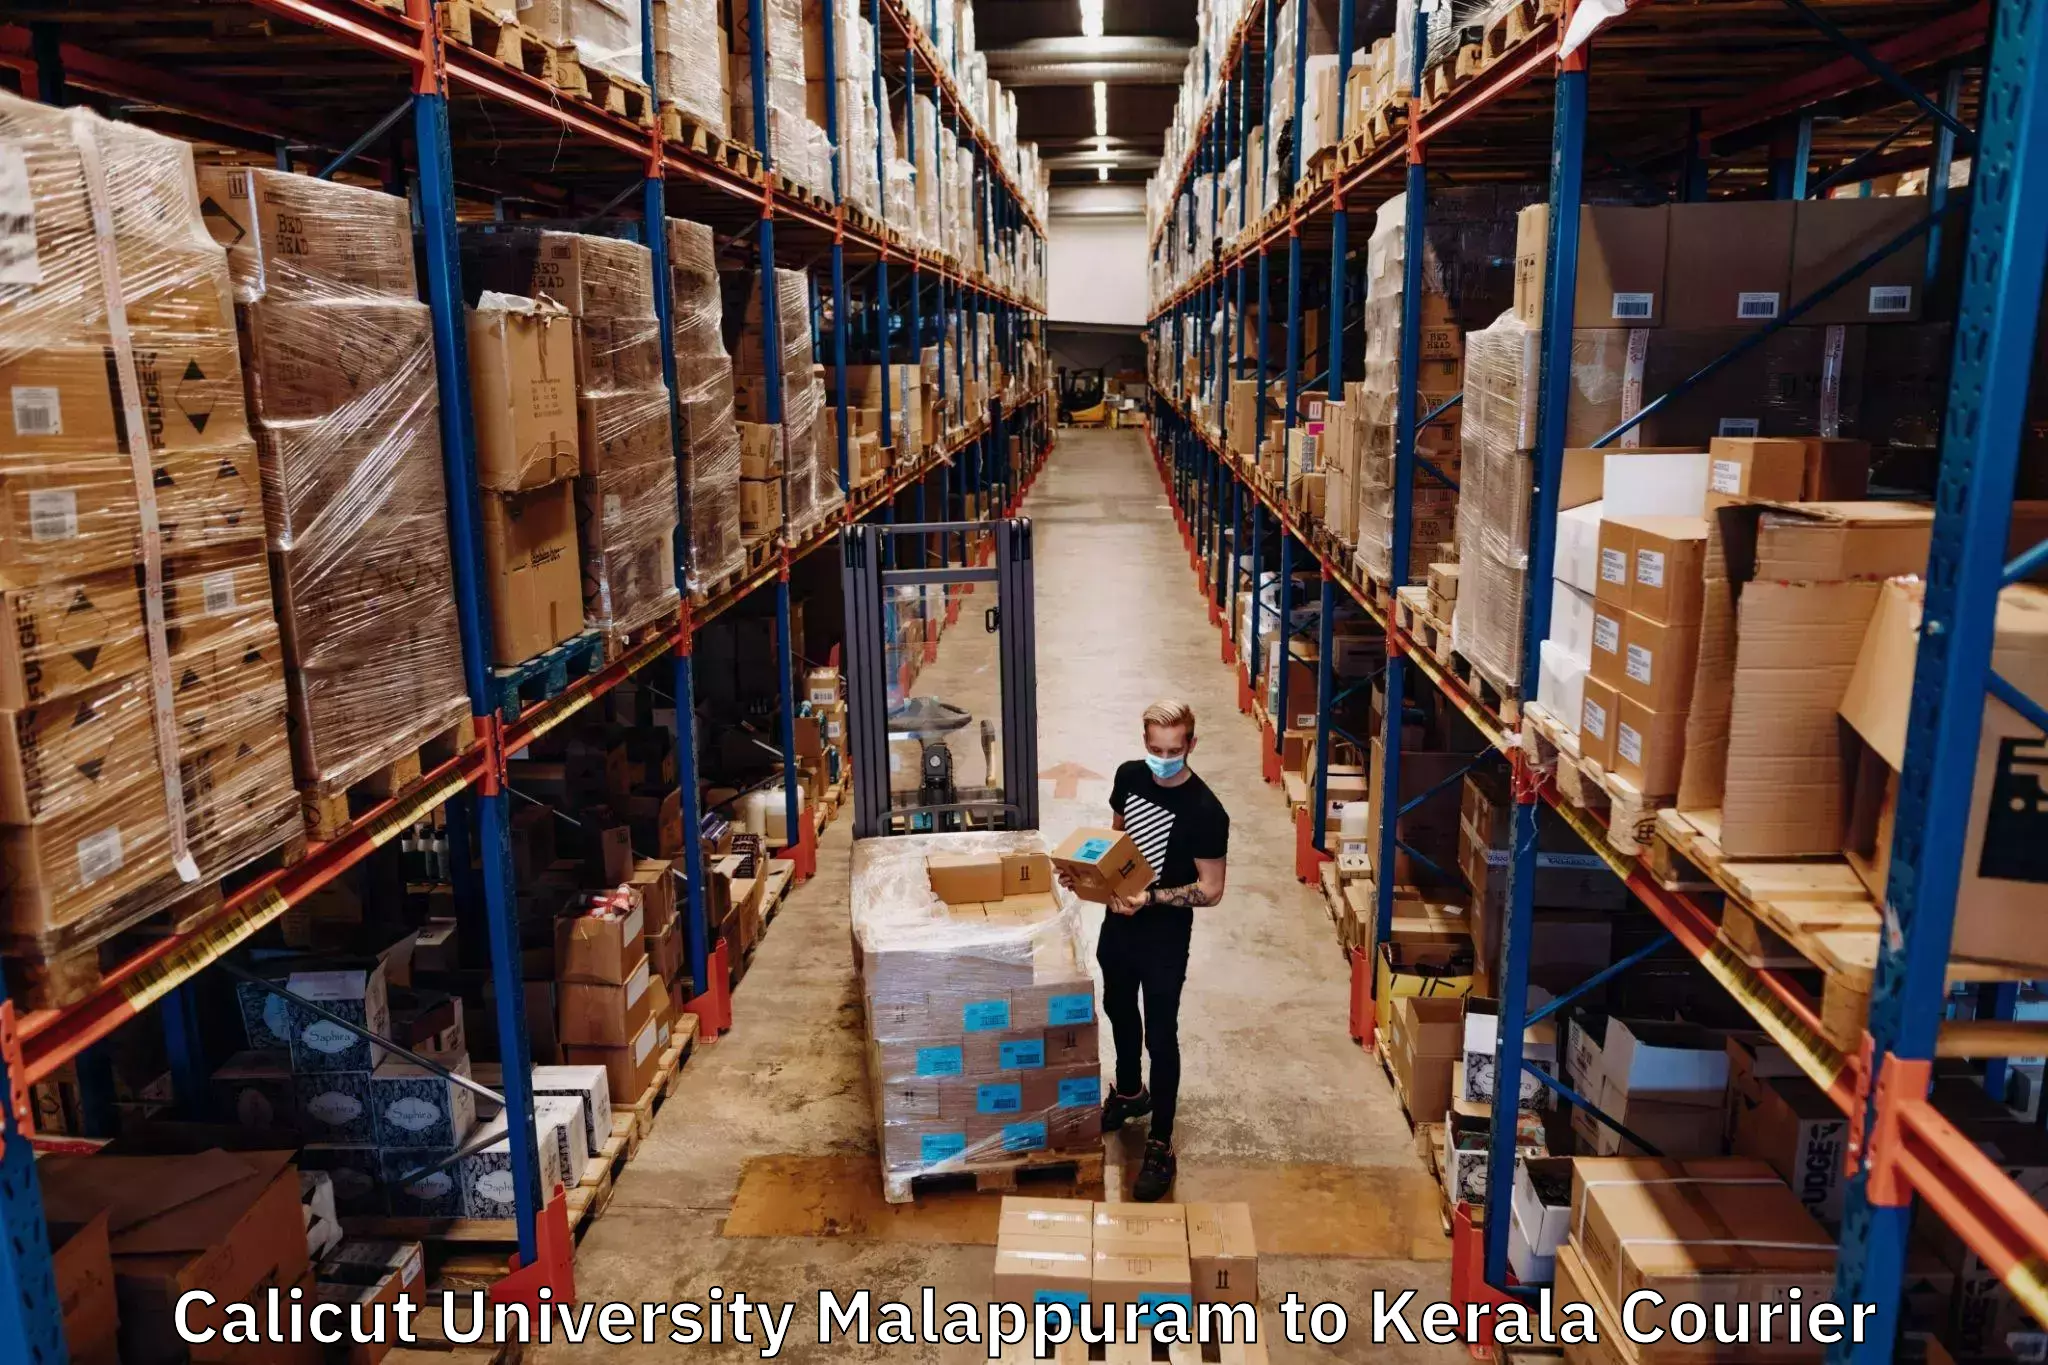 Express package delivery Calicut University Malappuram to Kerala